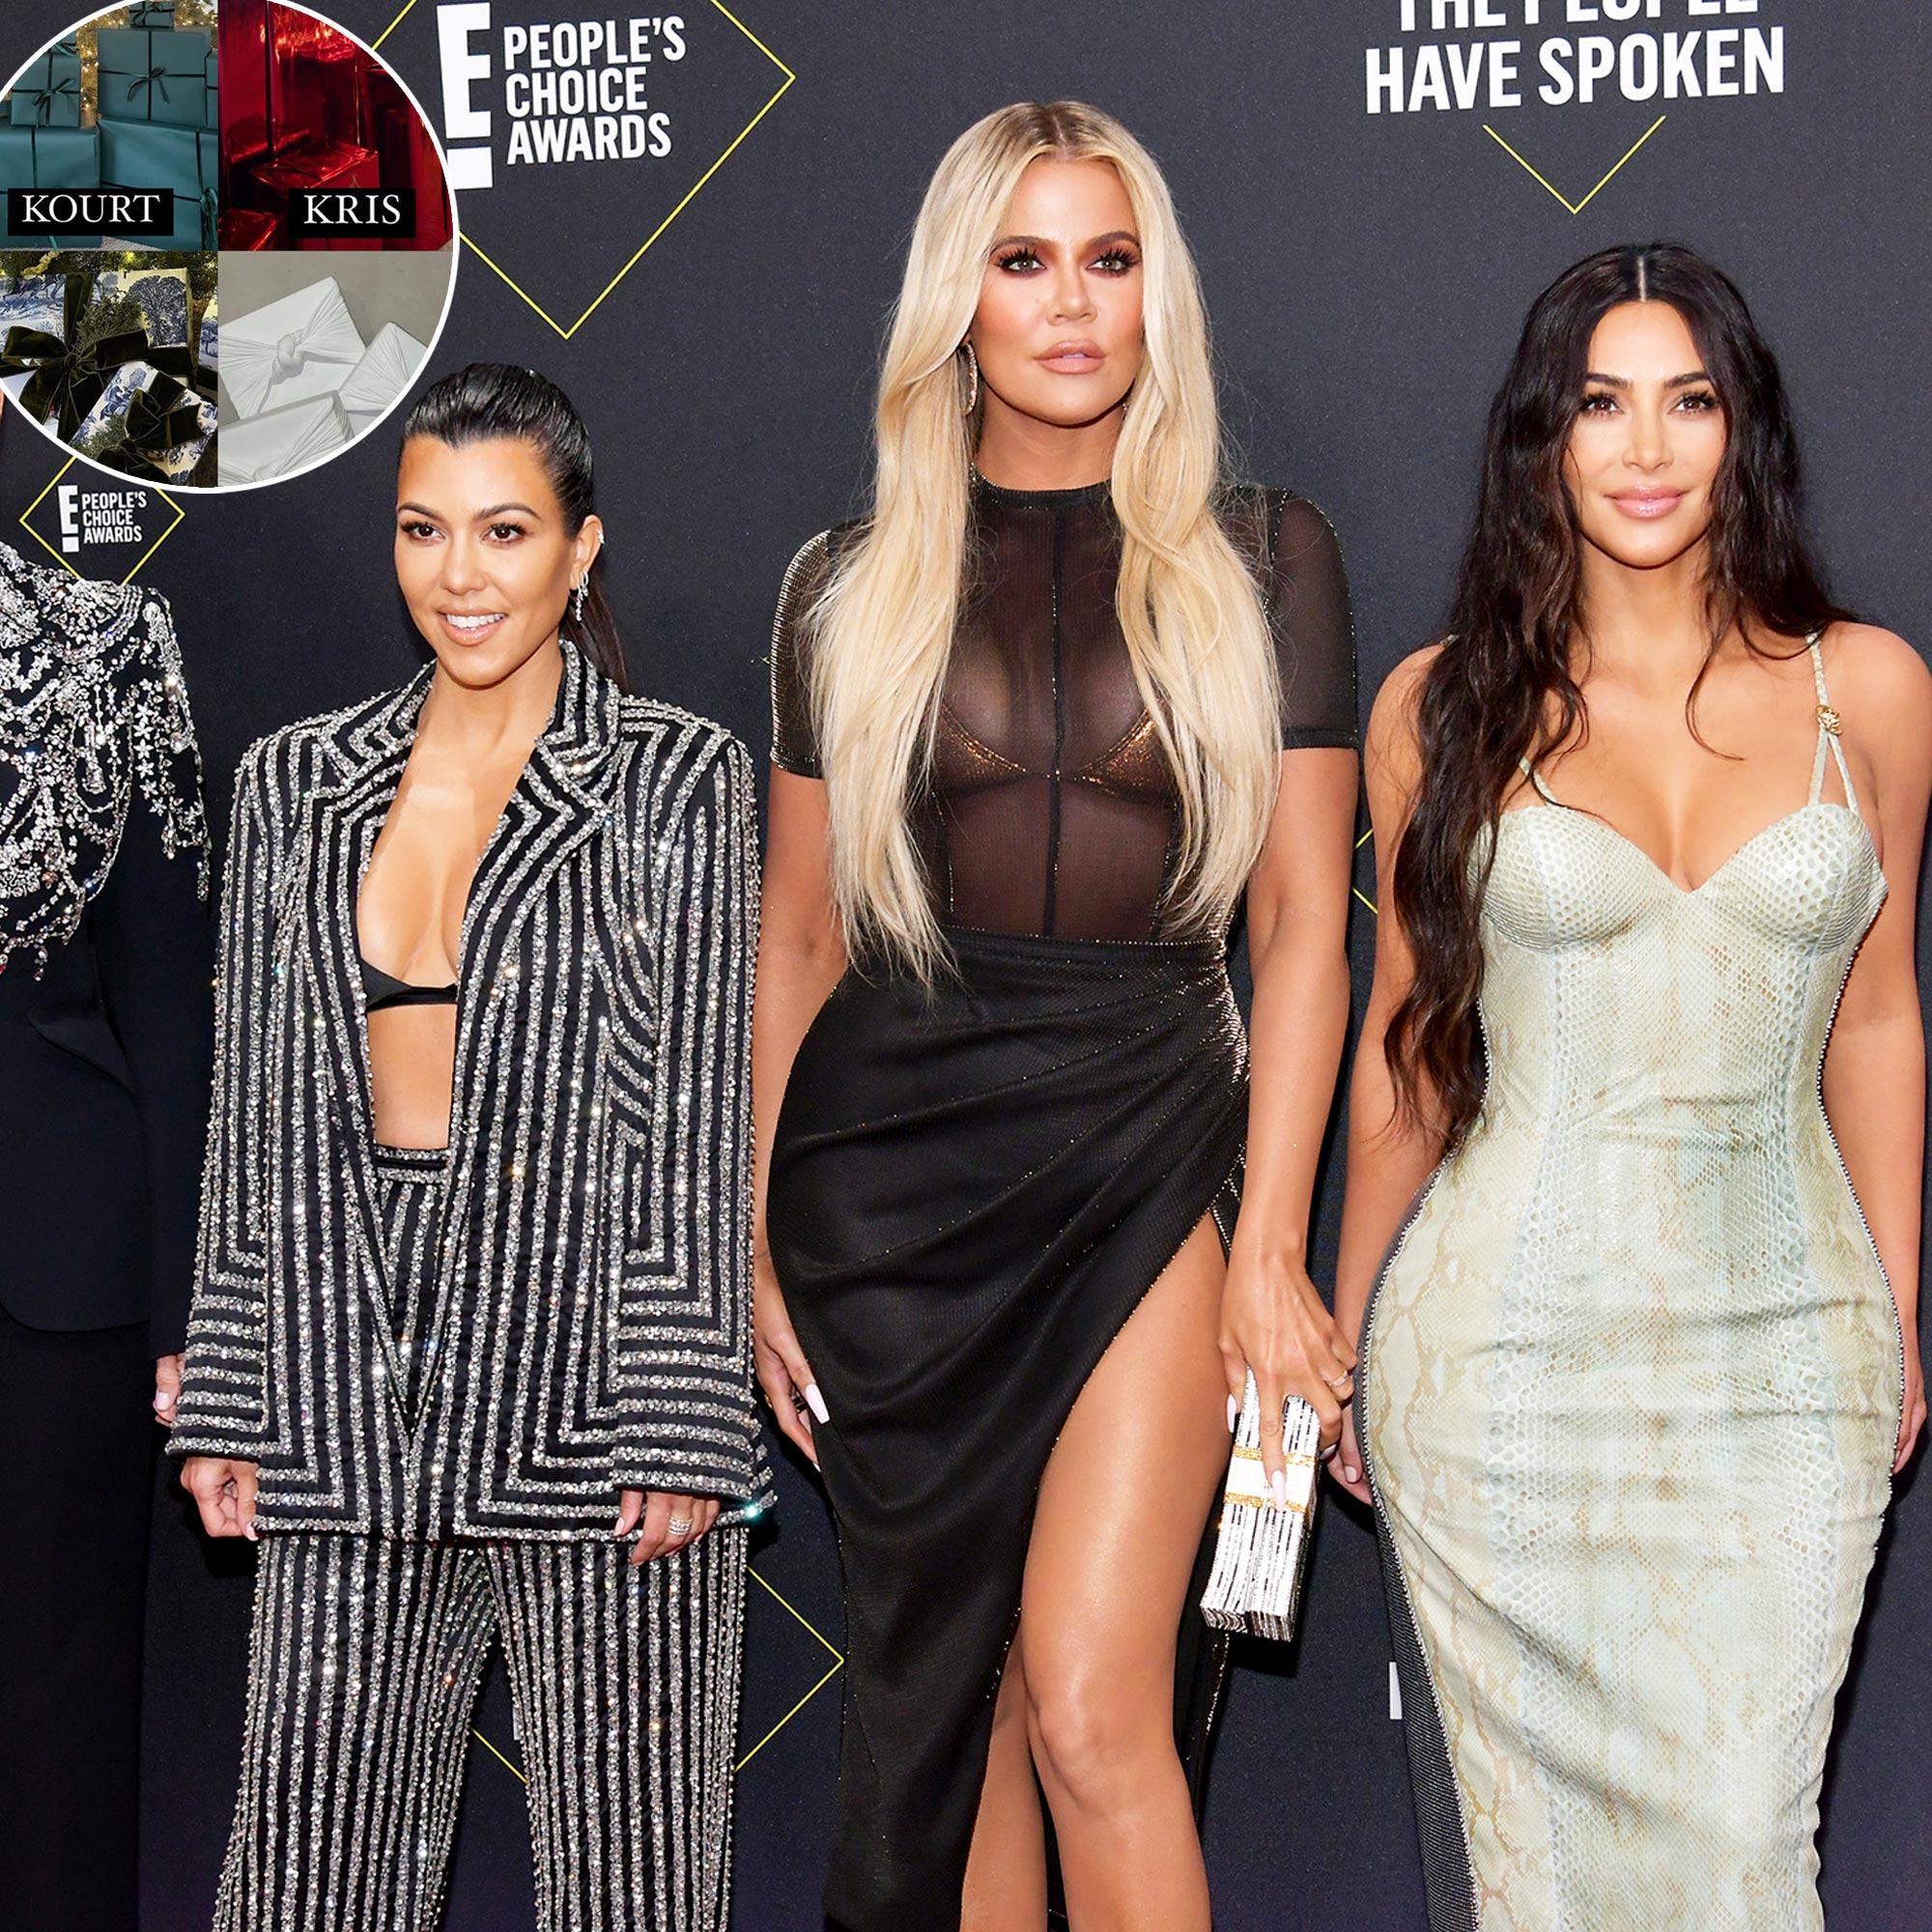 Exclusive* Sneak Peek at the Kardashian/Jenners' Gift Wrapping - Poosh